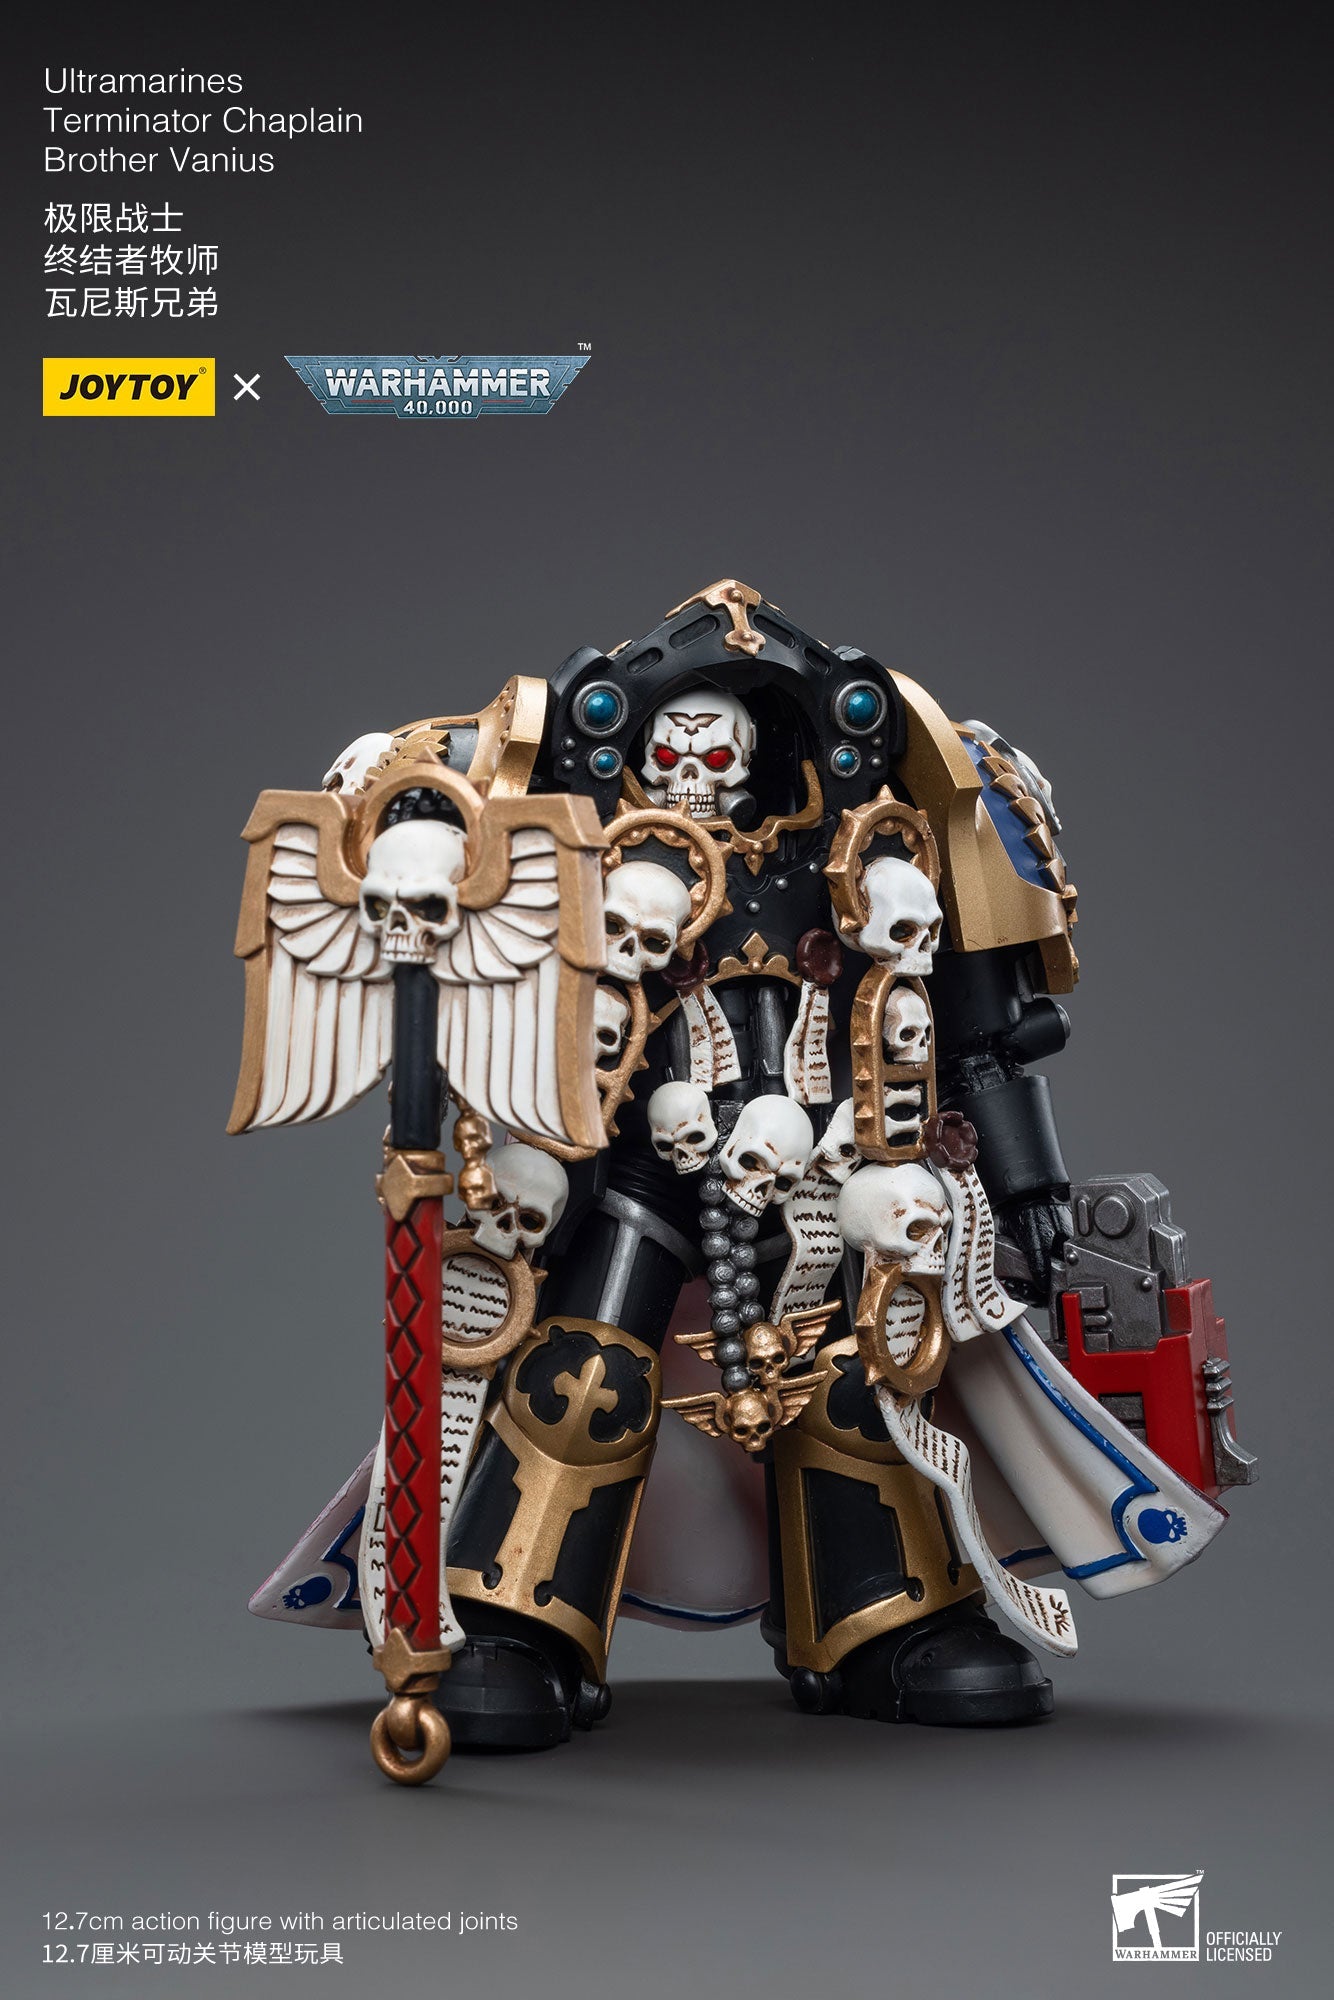 Ultramarines Terminator Chaplain Brother Vanius - Warhammer 40K Action Figure By JOYTOY